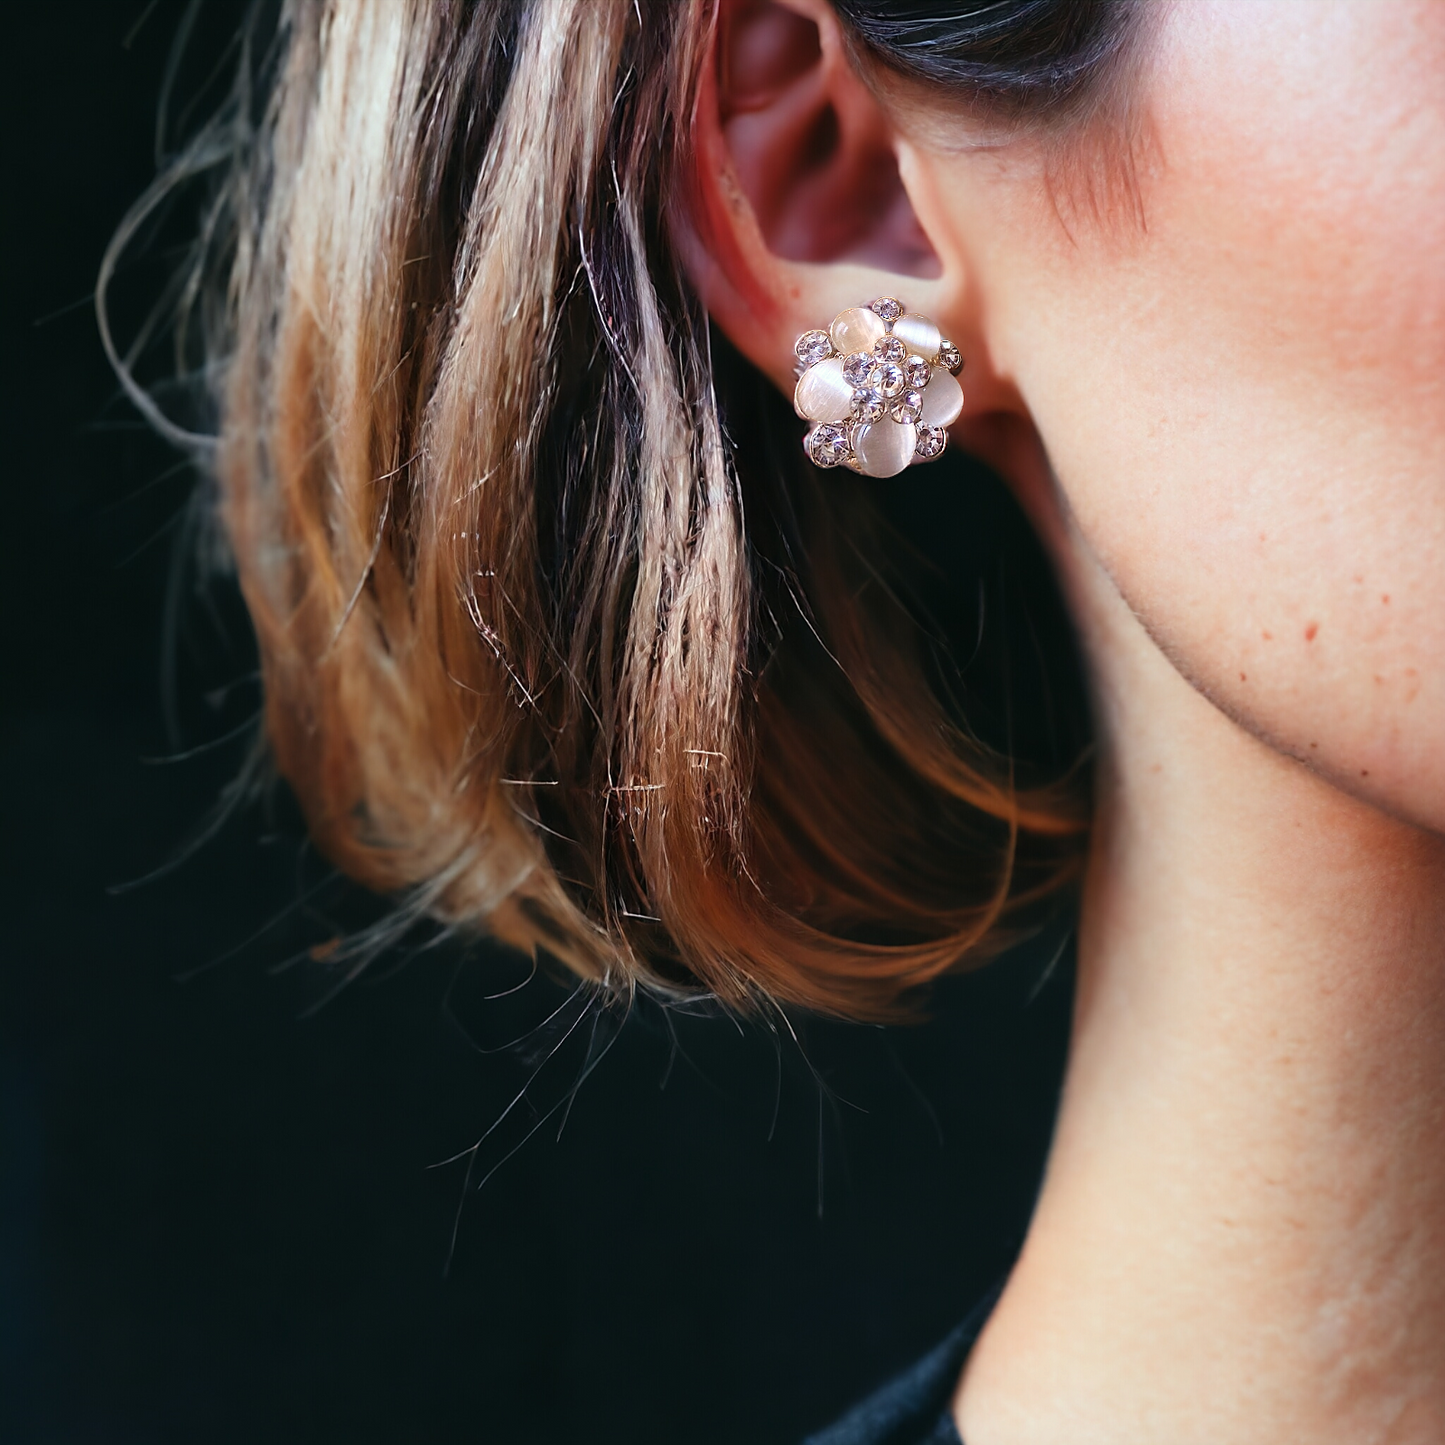 Enamel and Rhinestone Flower Earrings